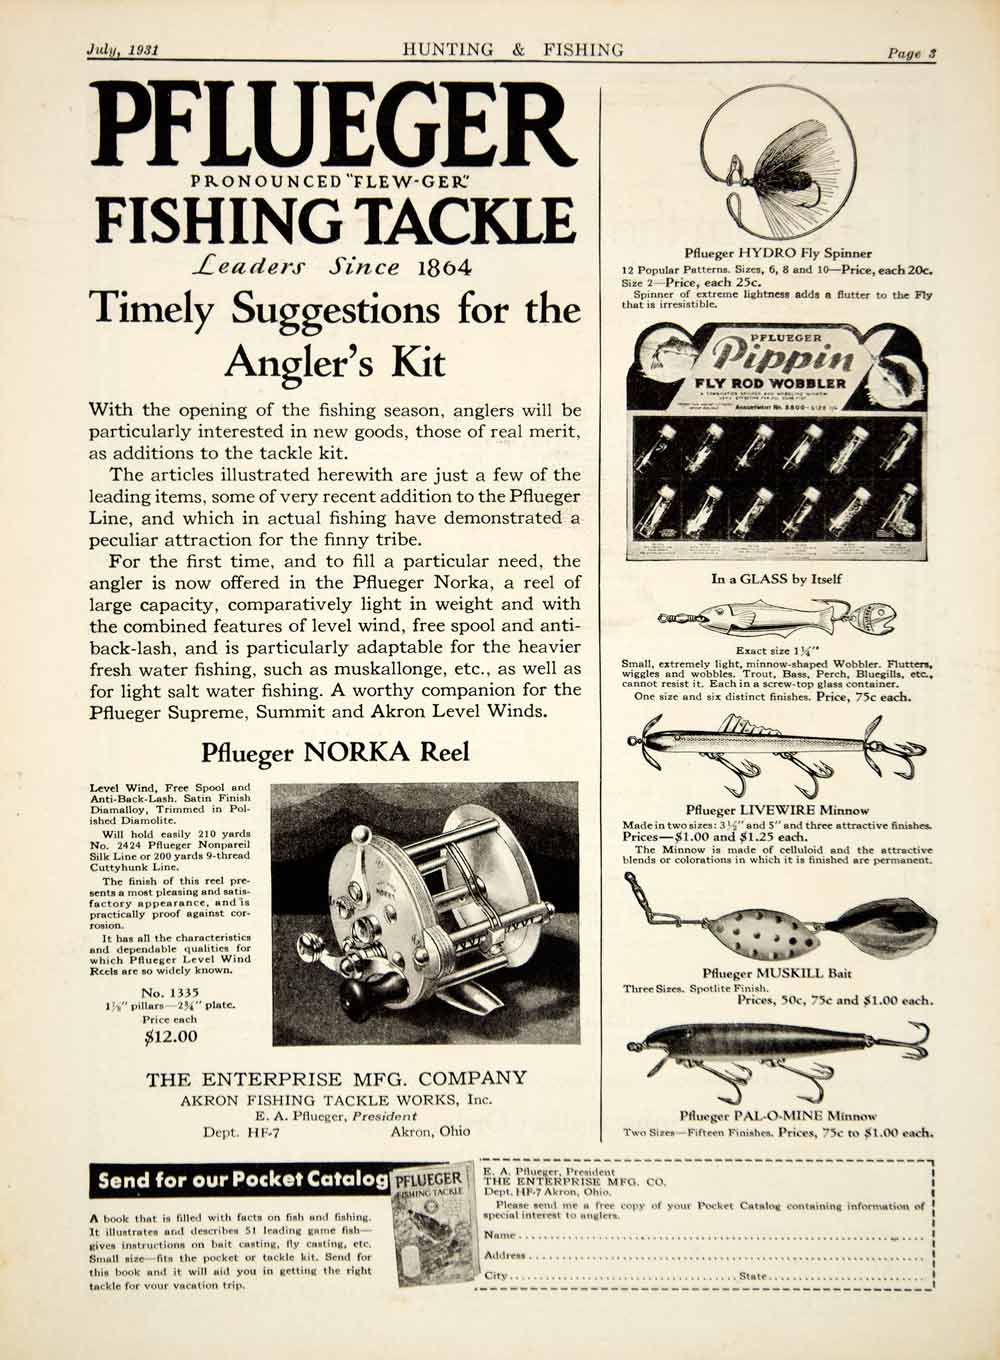 1931 Ad Bait Casting Tin Liz Minnow Fishing Lure Fred Arbogast